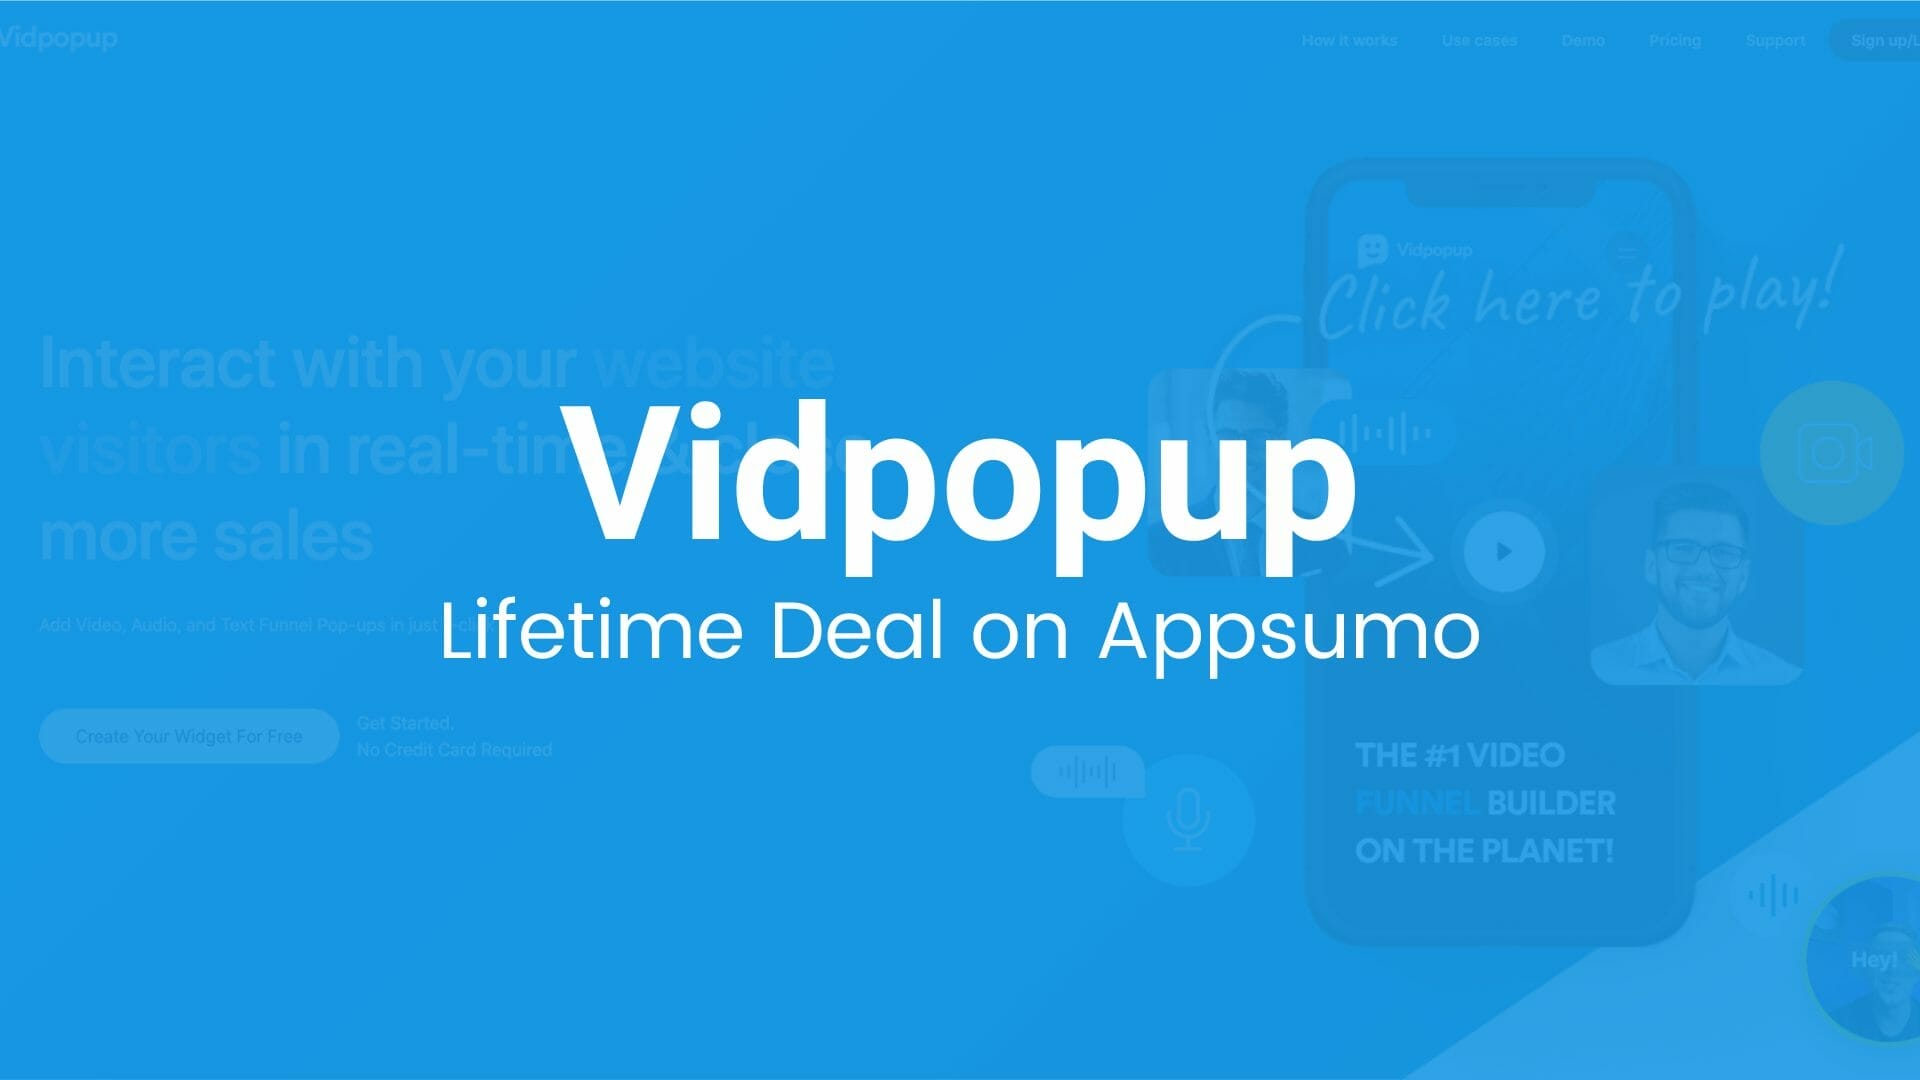 Vidpopup: Create Engaging Video Funnels That Convert